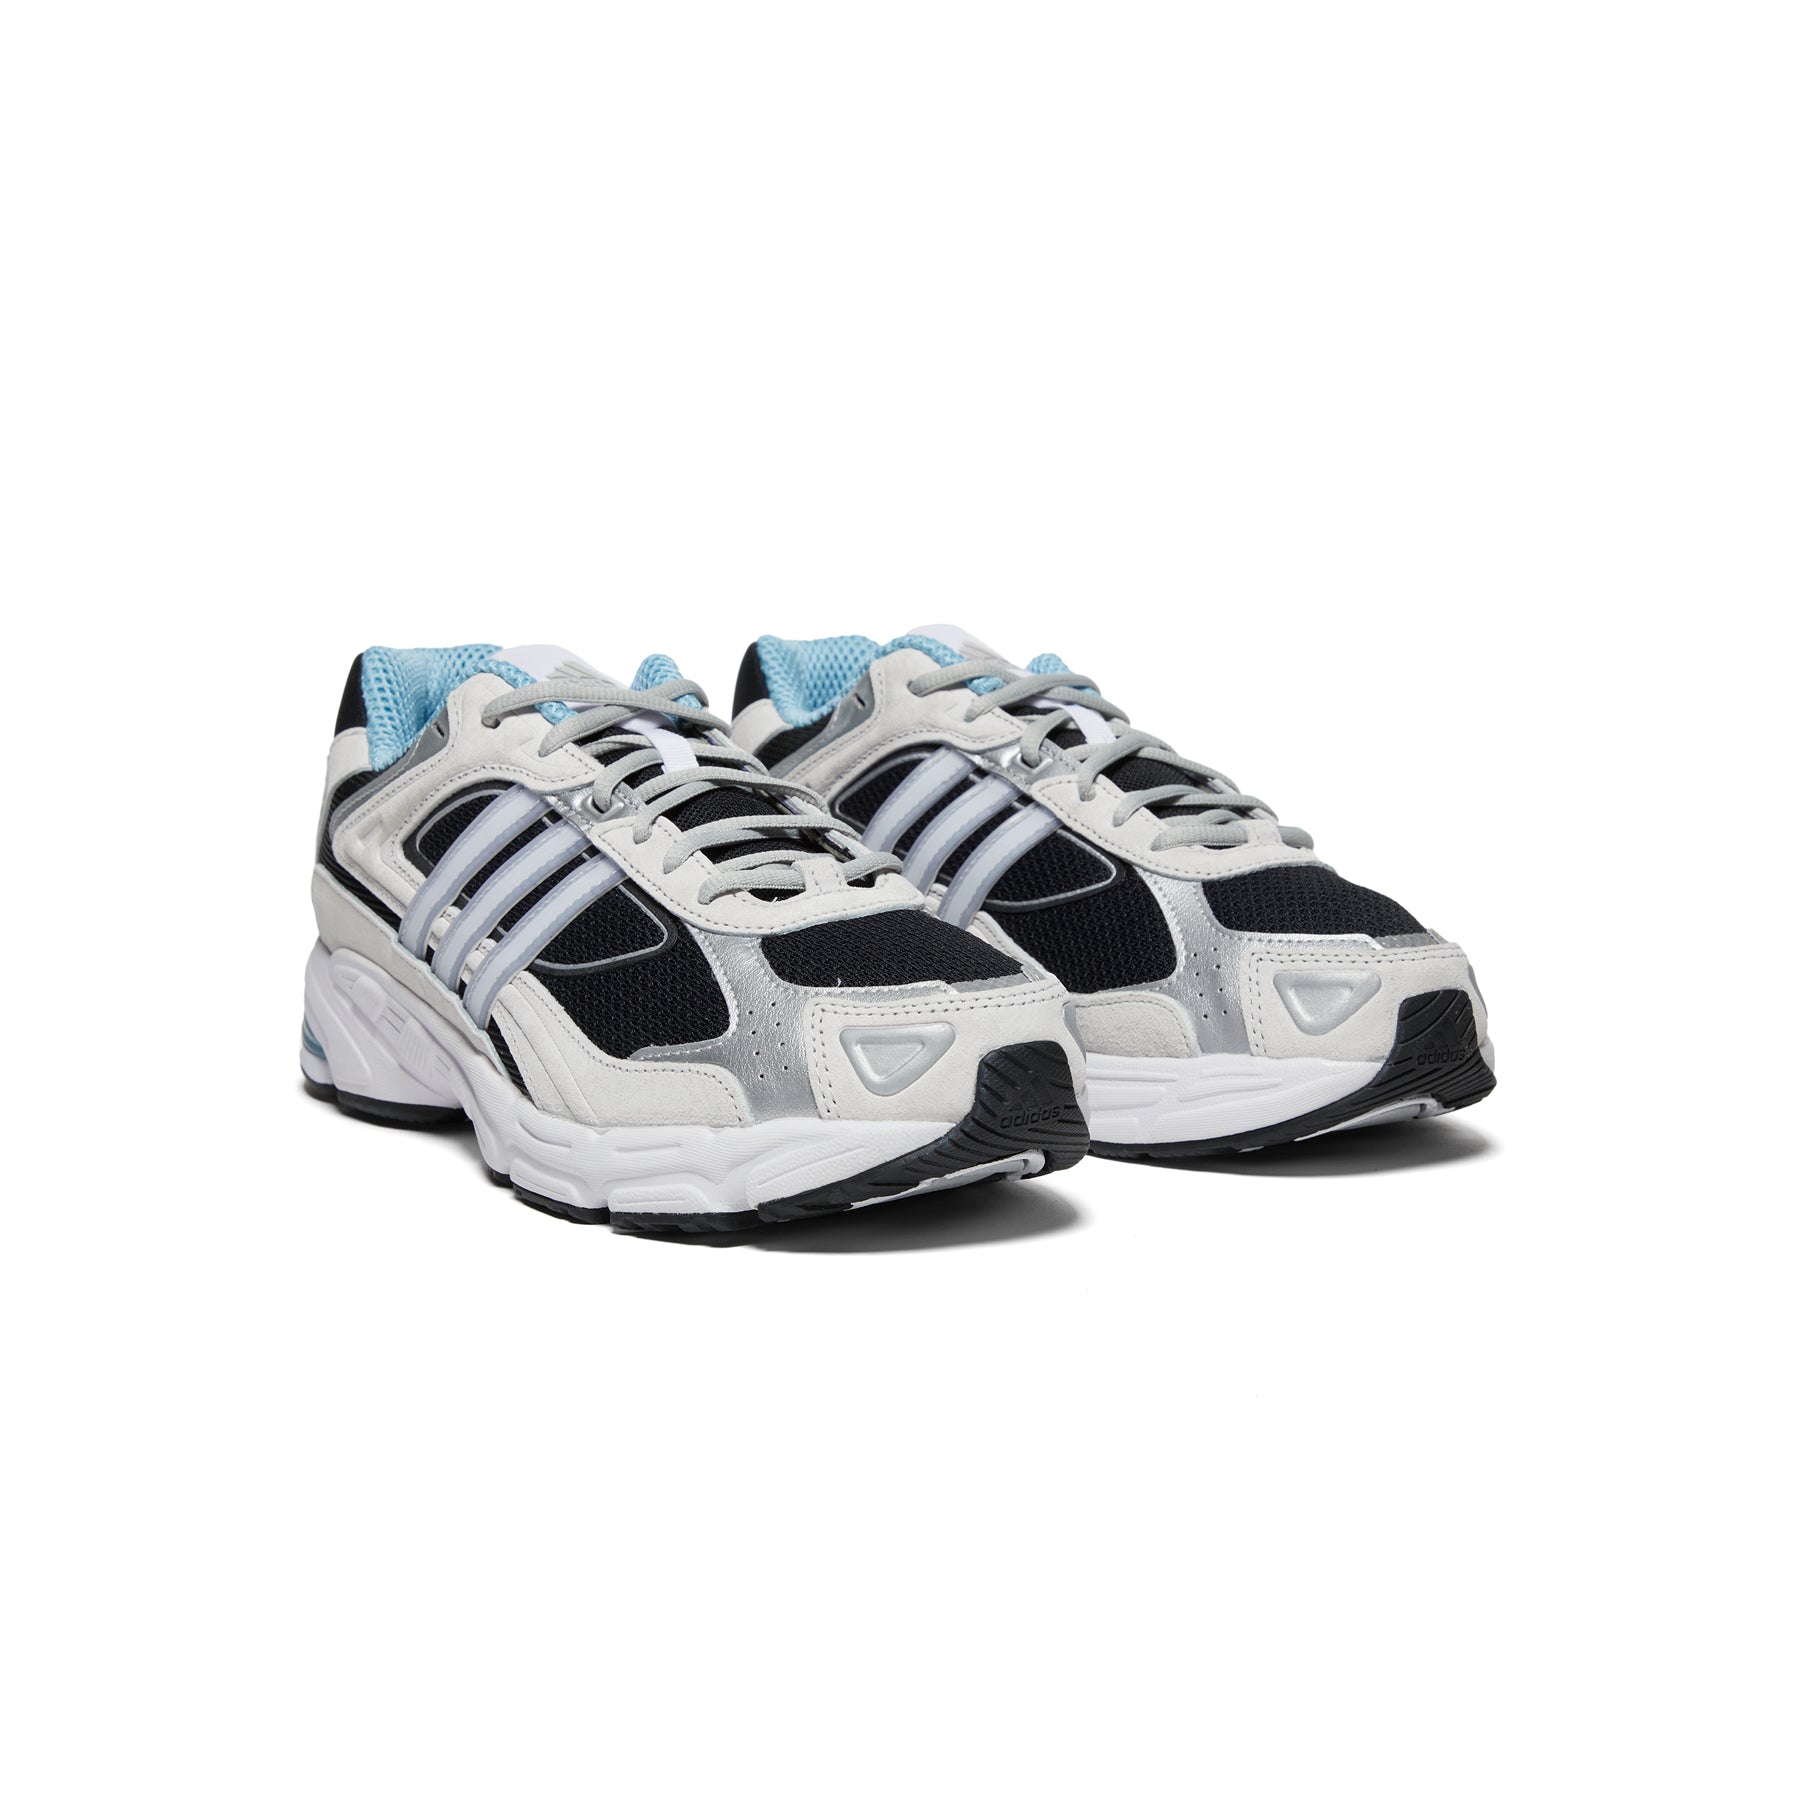 Adidas Response White/Blue) Concepts CL Black/Feather (Core –